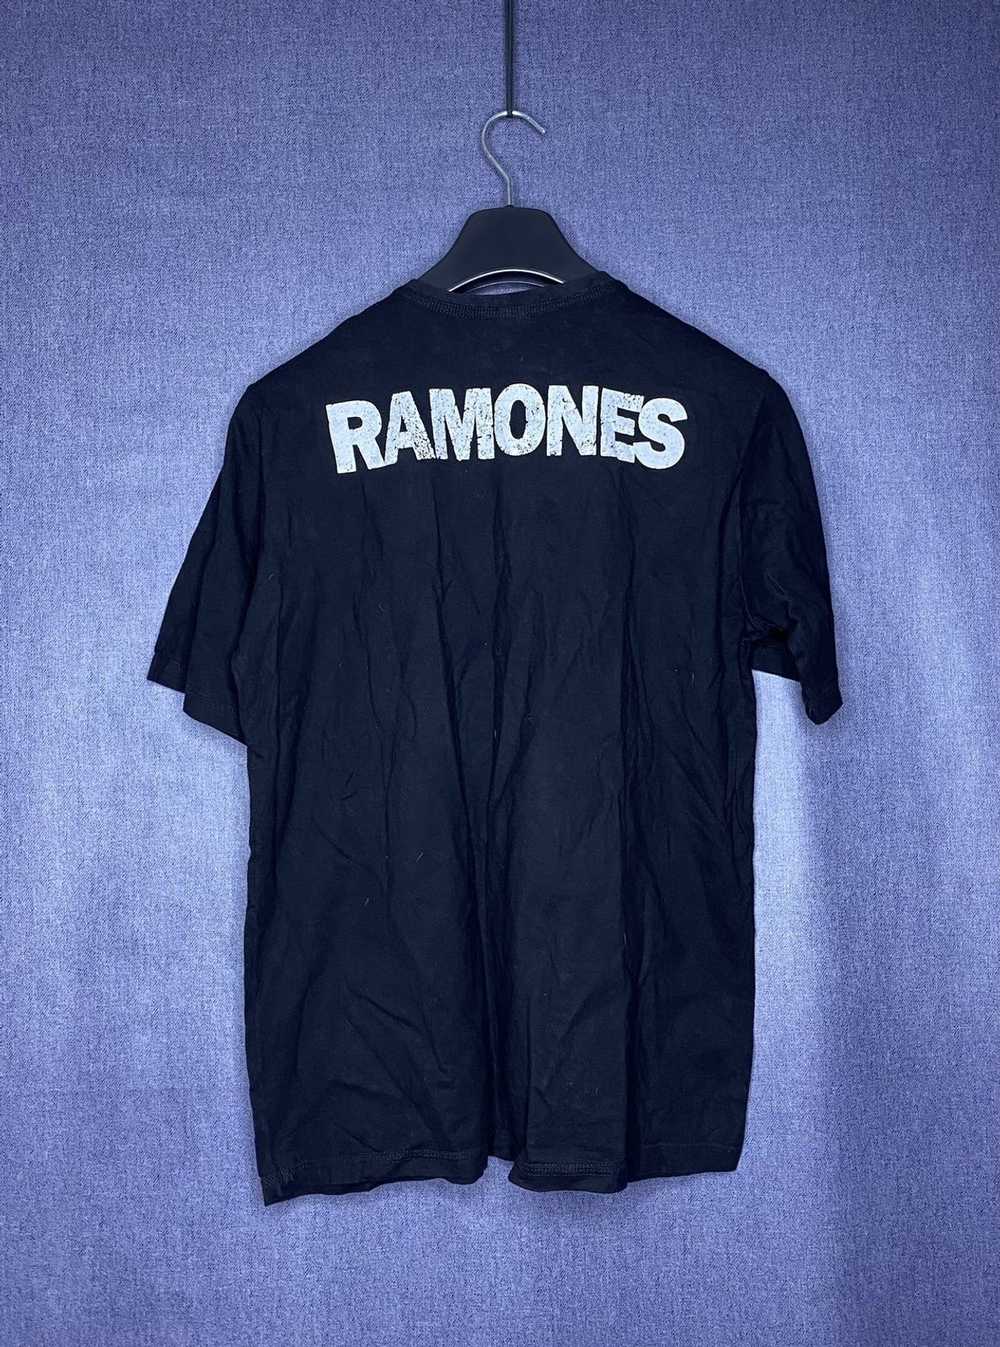 Band Tees × Vintage Ramones vintage t shirt rare - image 2